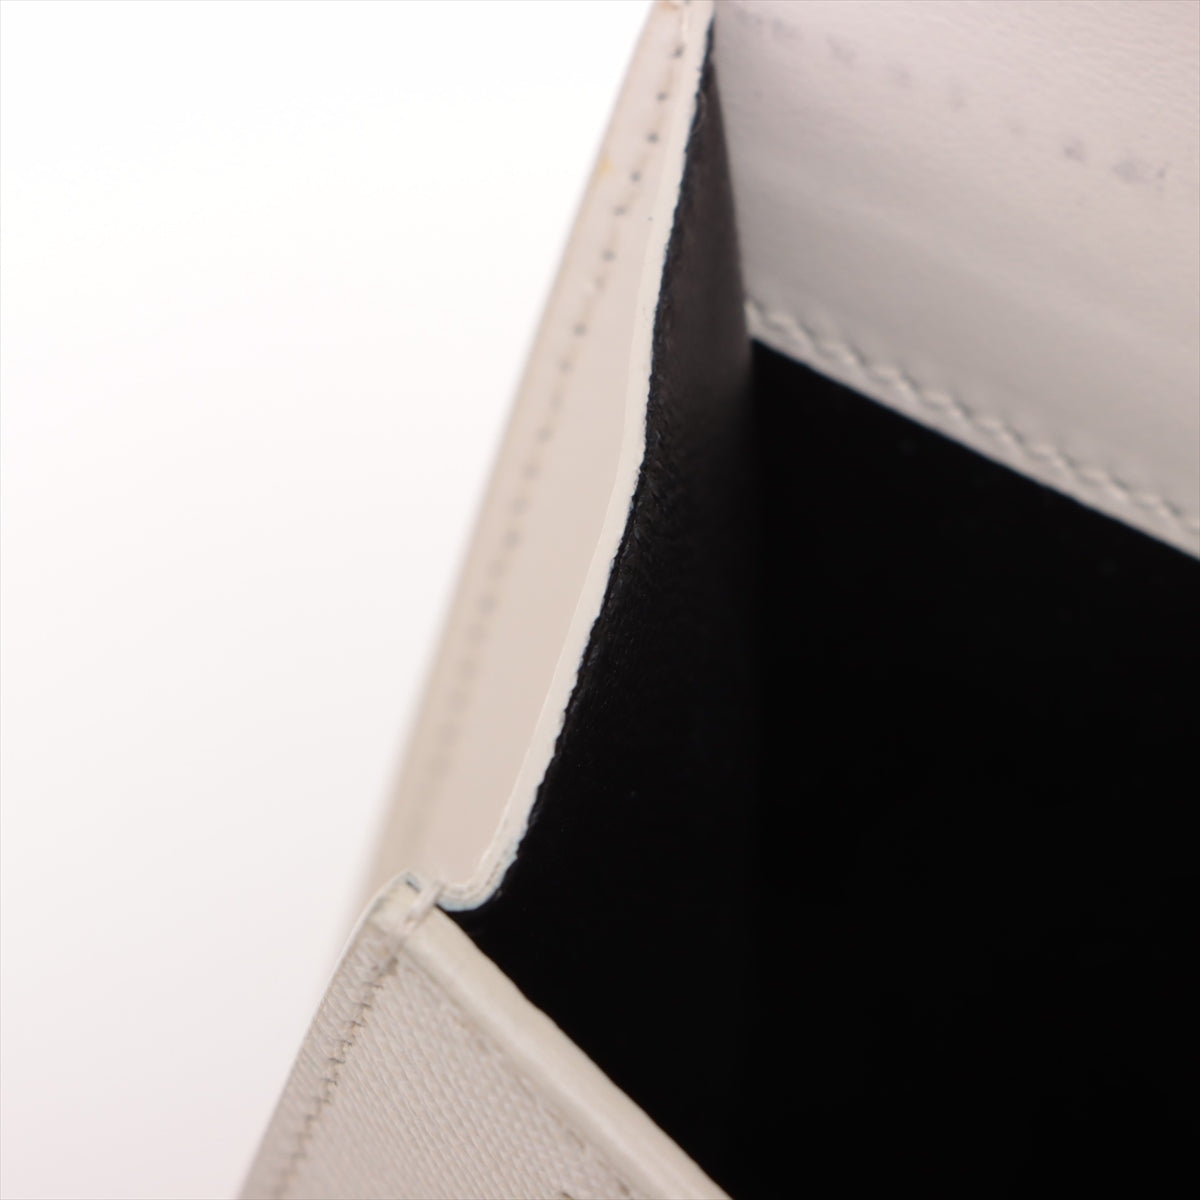 Prada Sapphire City Shoulder Bag White Mirror-Fit